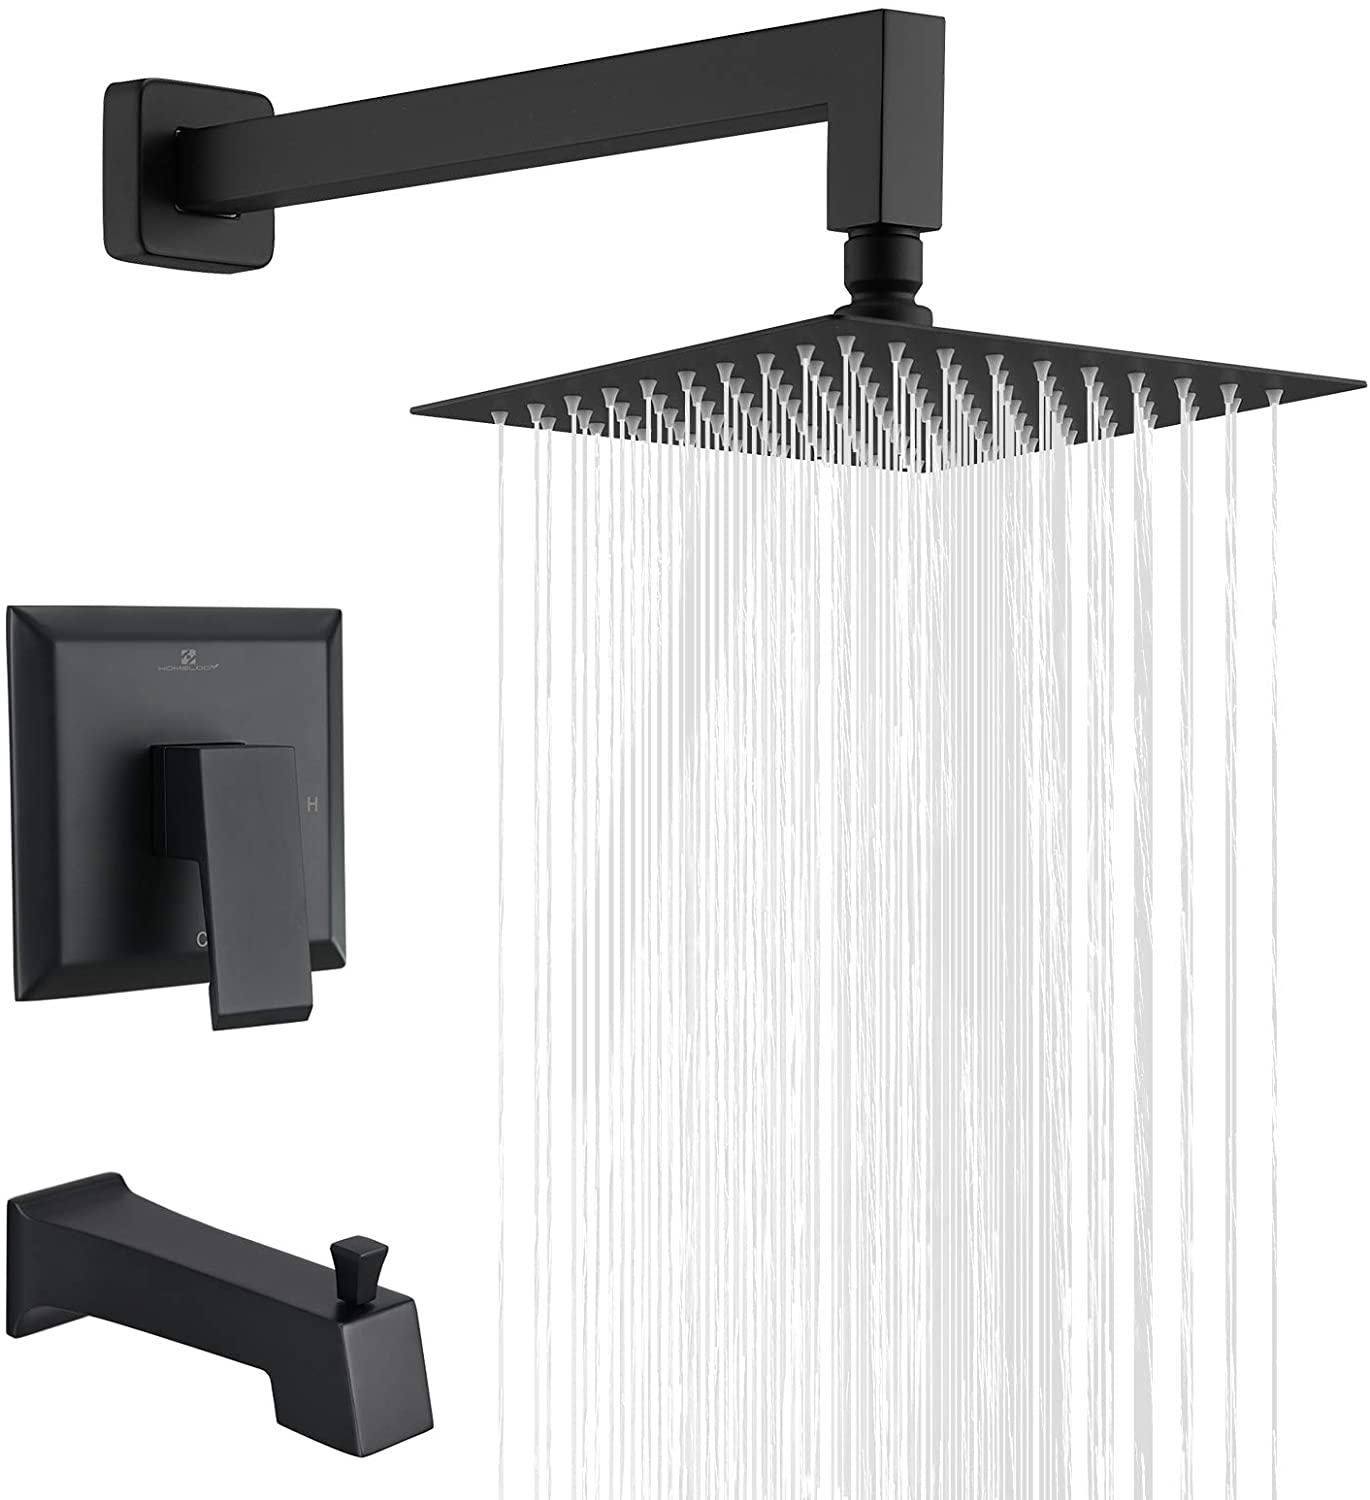 Matte Black Shower System Rain Head 2 Way Mixer Valve Handheld Spray Faucet Set